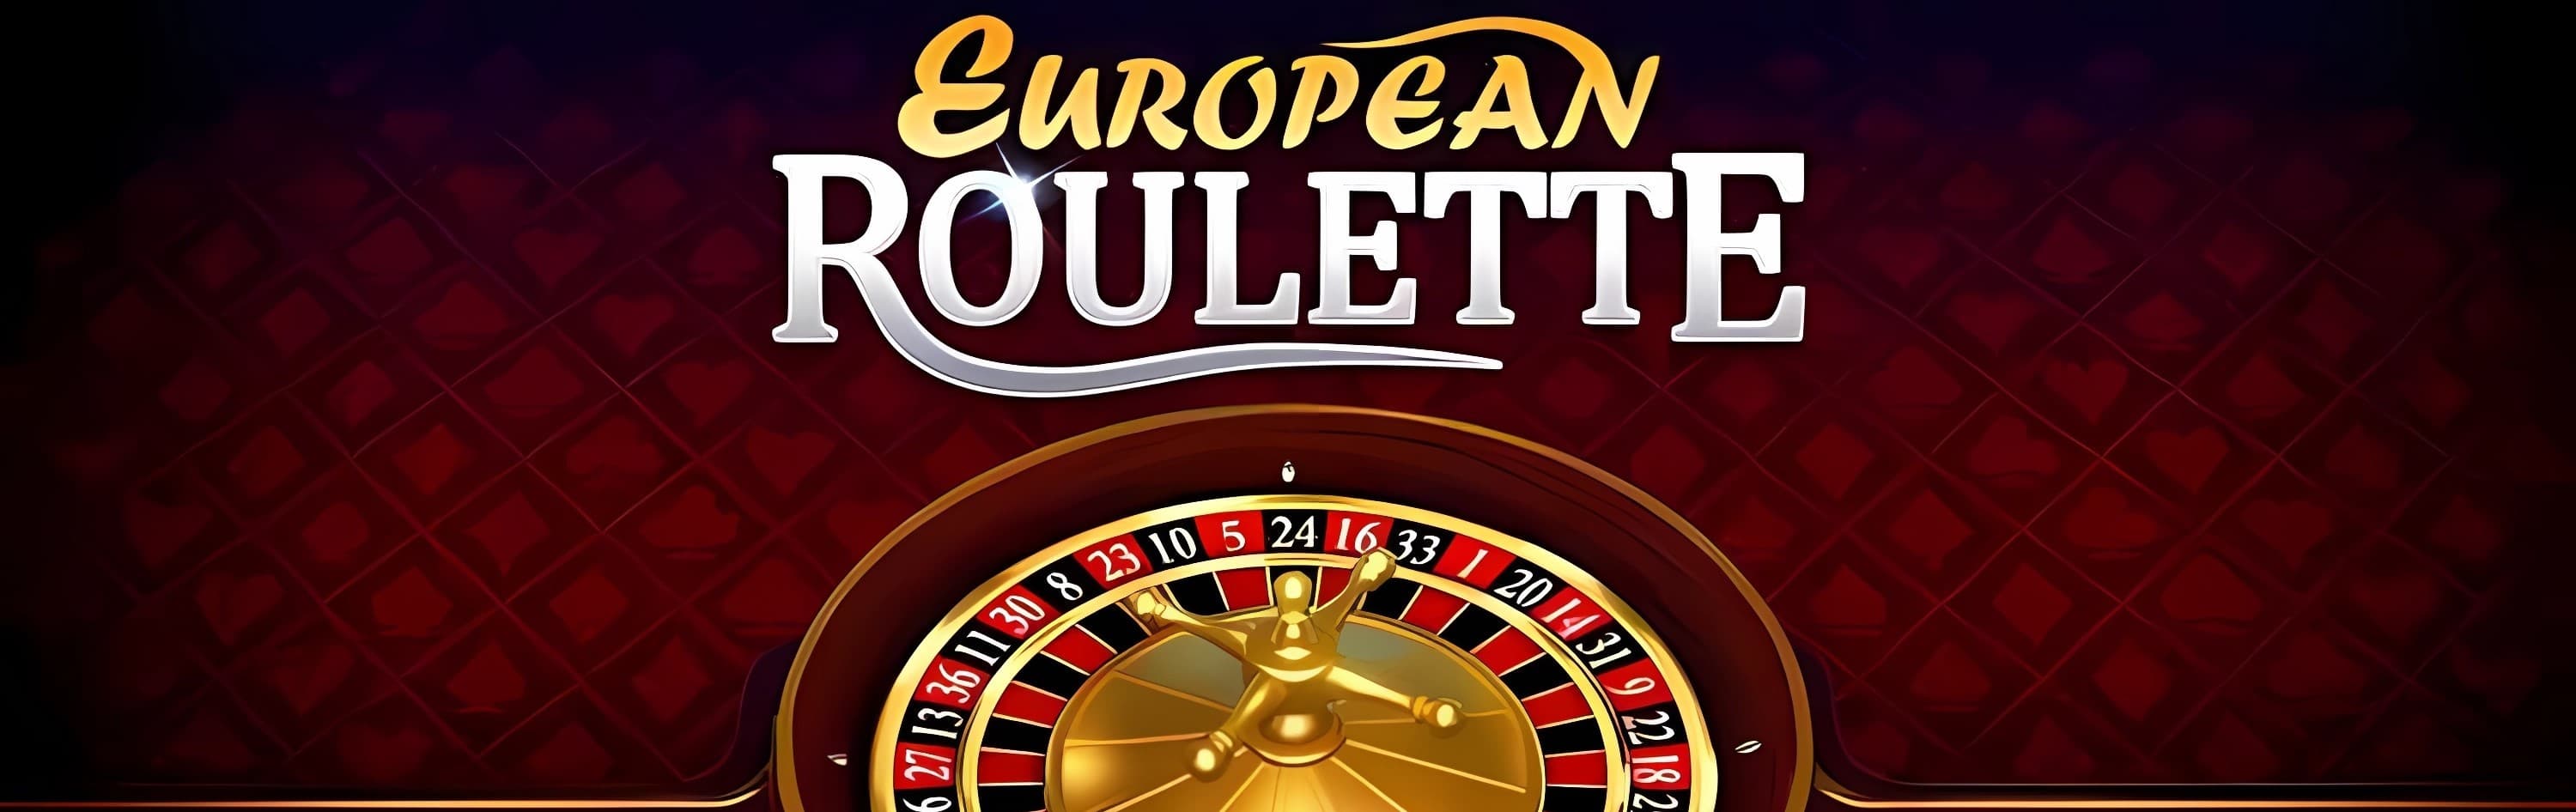 European Roulette cover